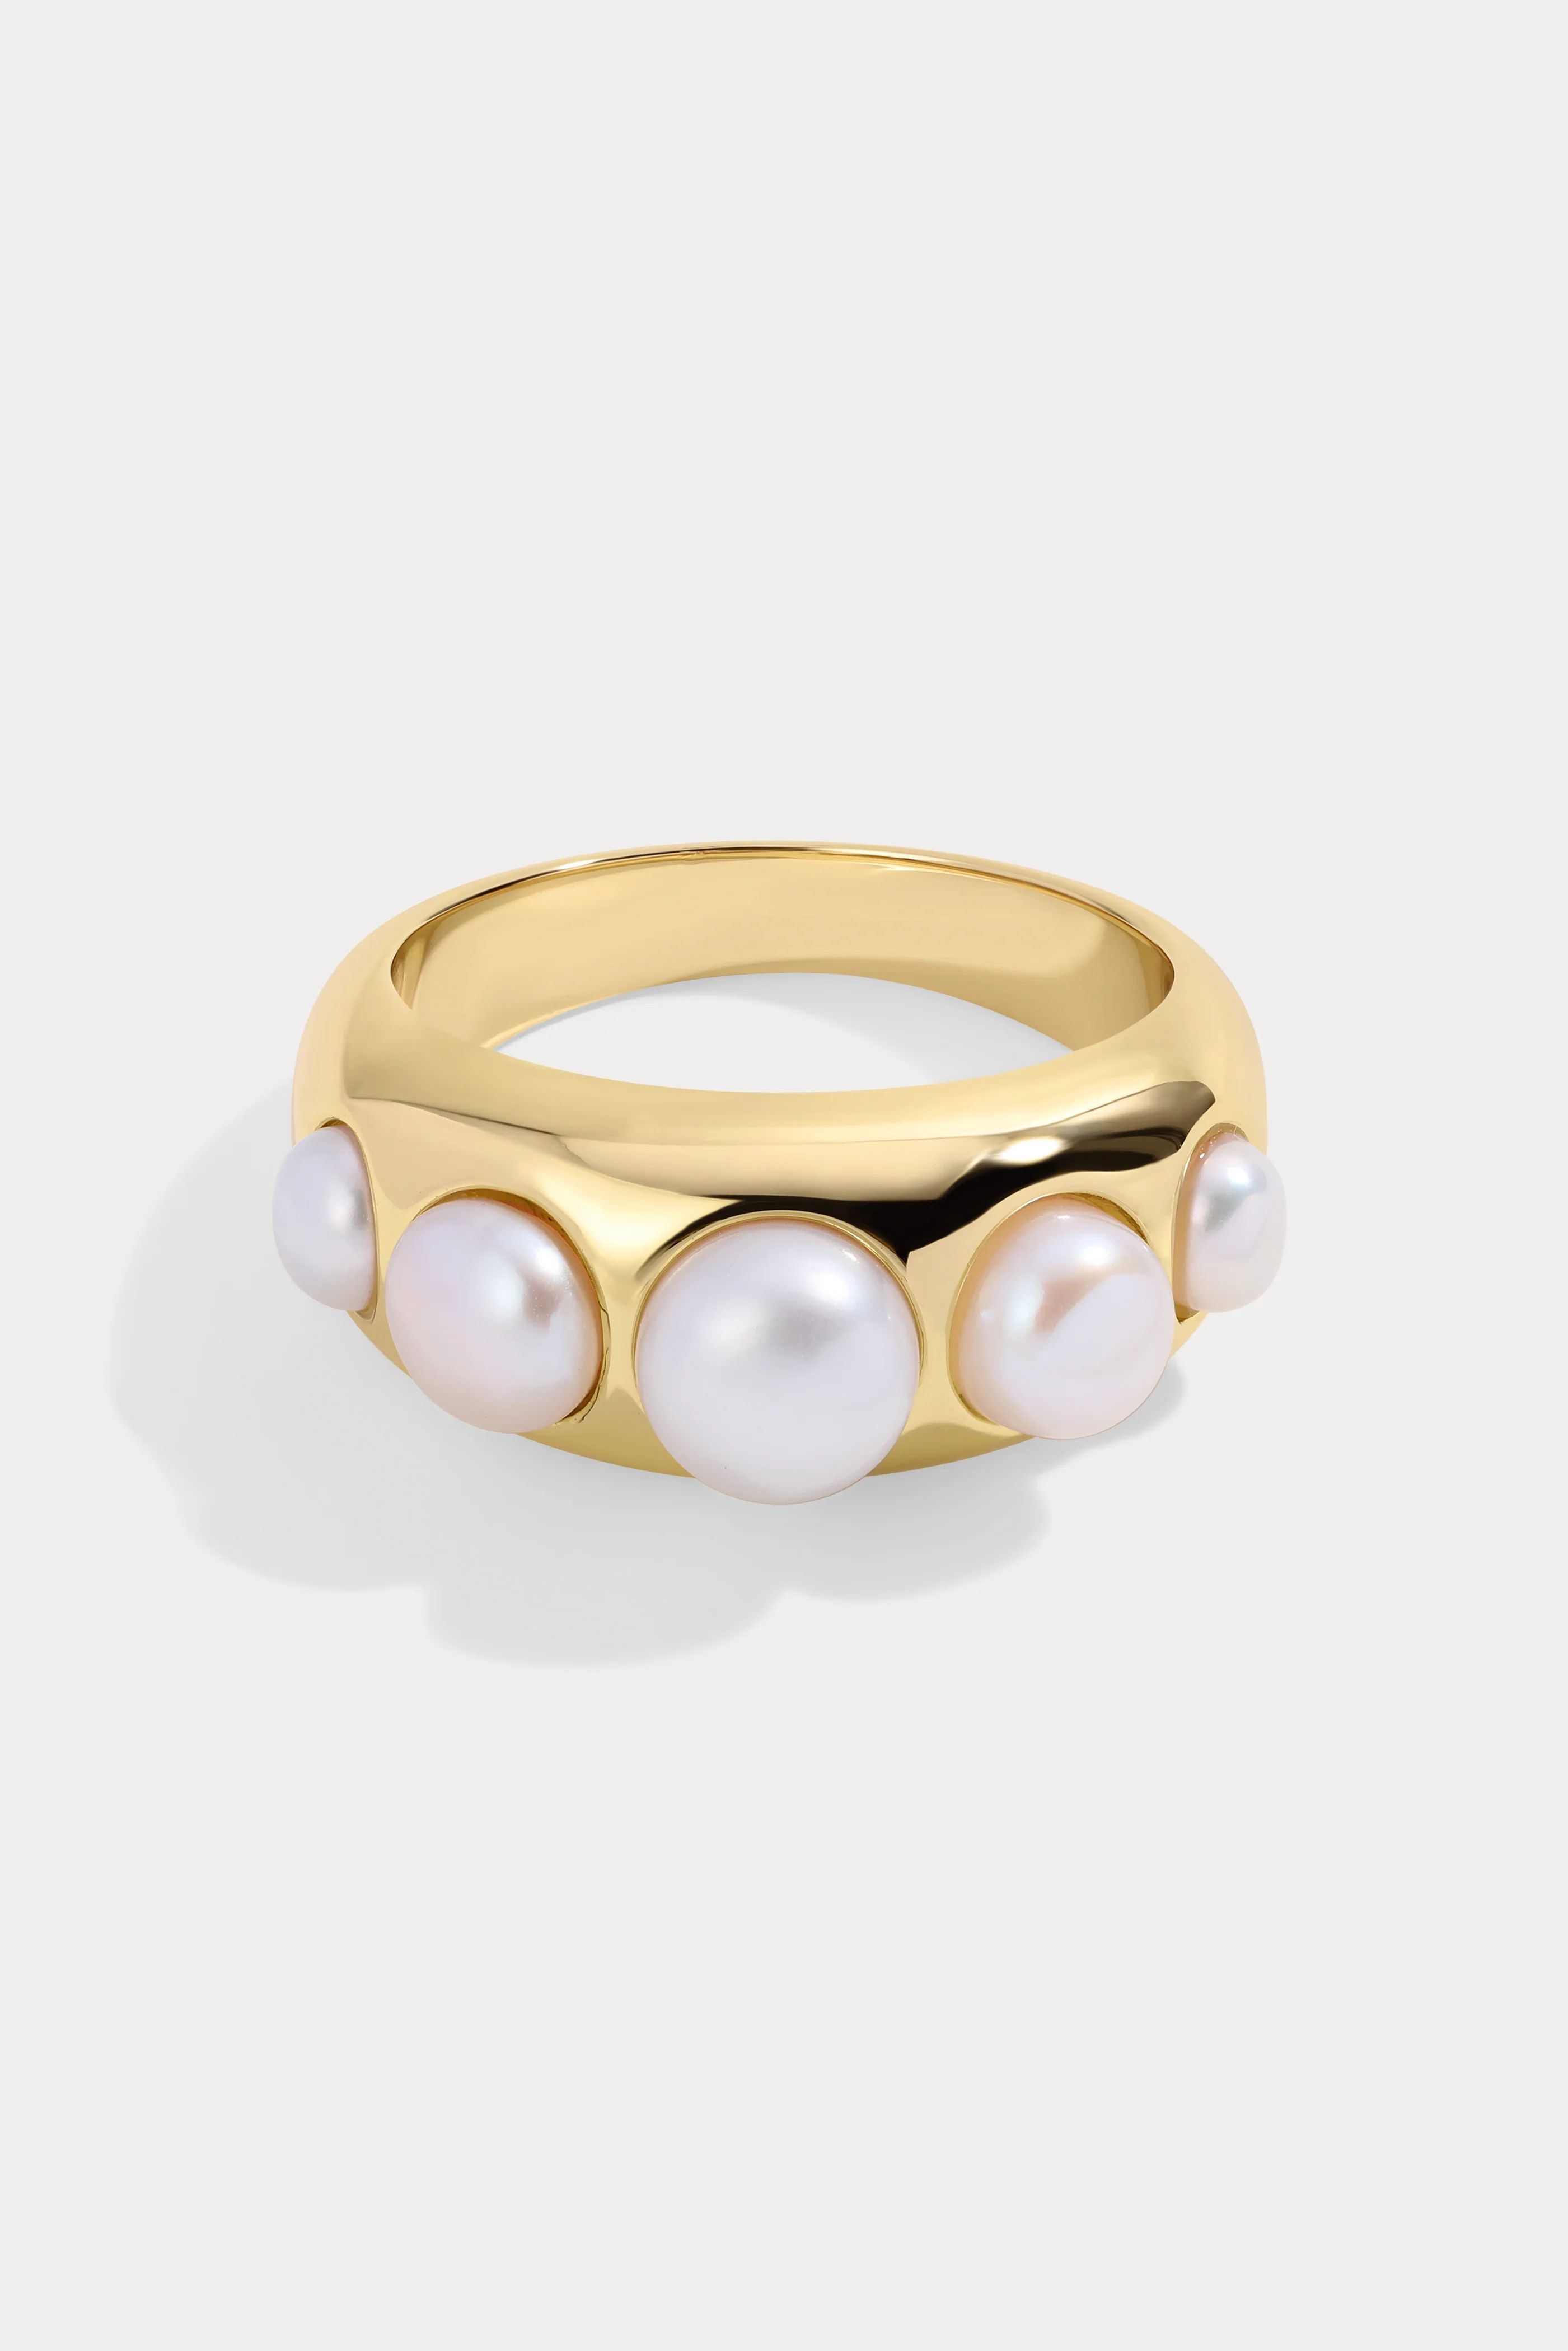 Adira Pearl Ring | Lili Claspe